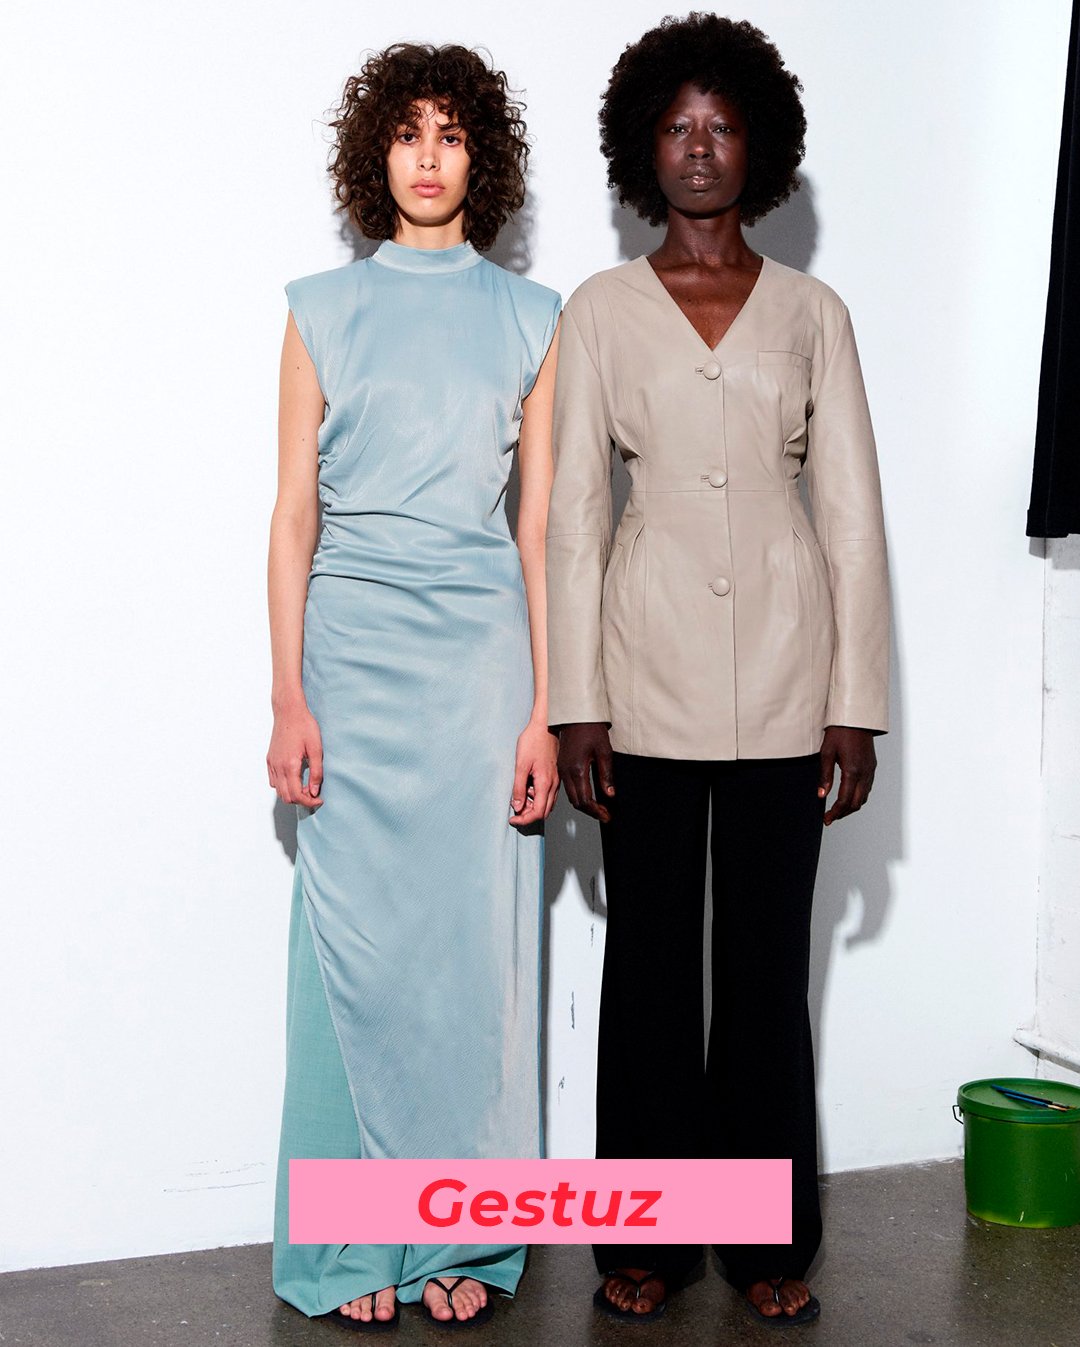 It girls - Gestuz - Copenhague Fashion Week - Inverno - Street Style - https://stealthelook.com.br